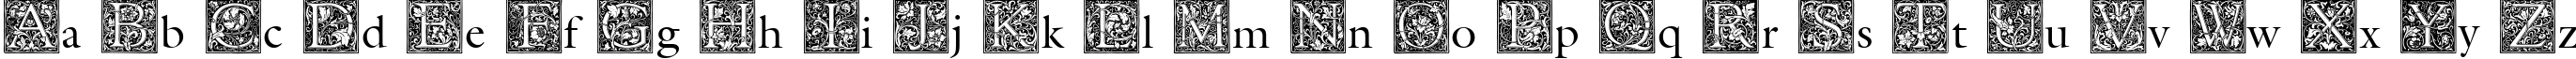 Пример написания английского алфавита шрифтом Medieval Initial One